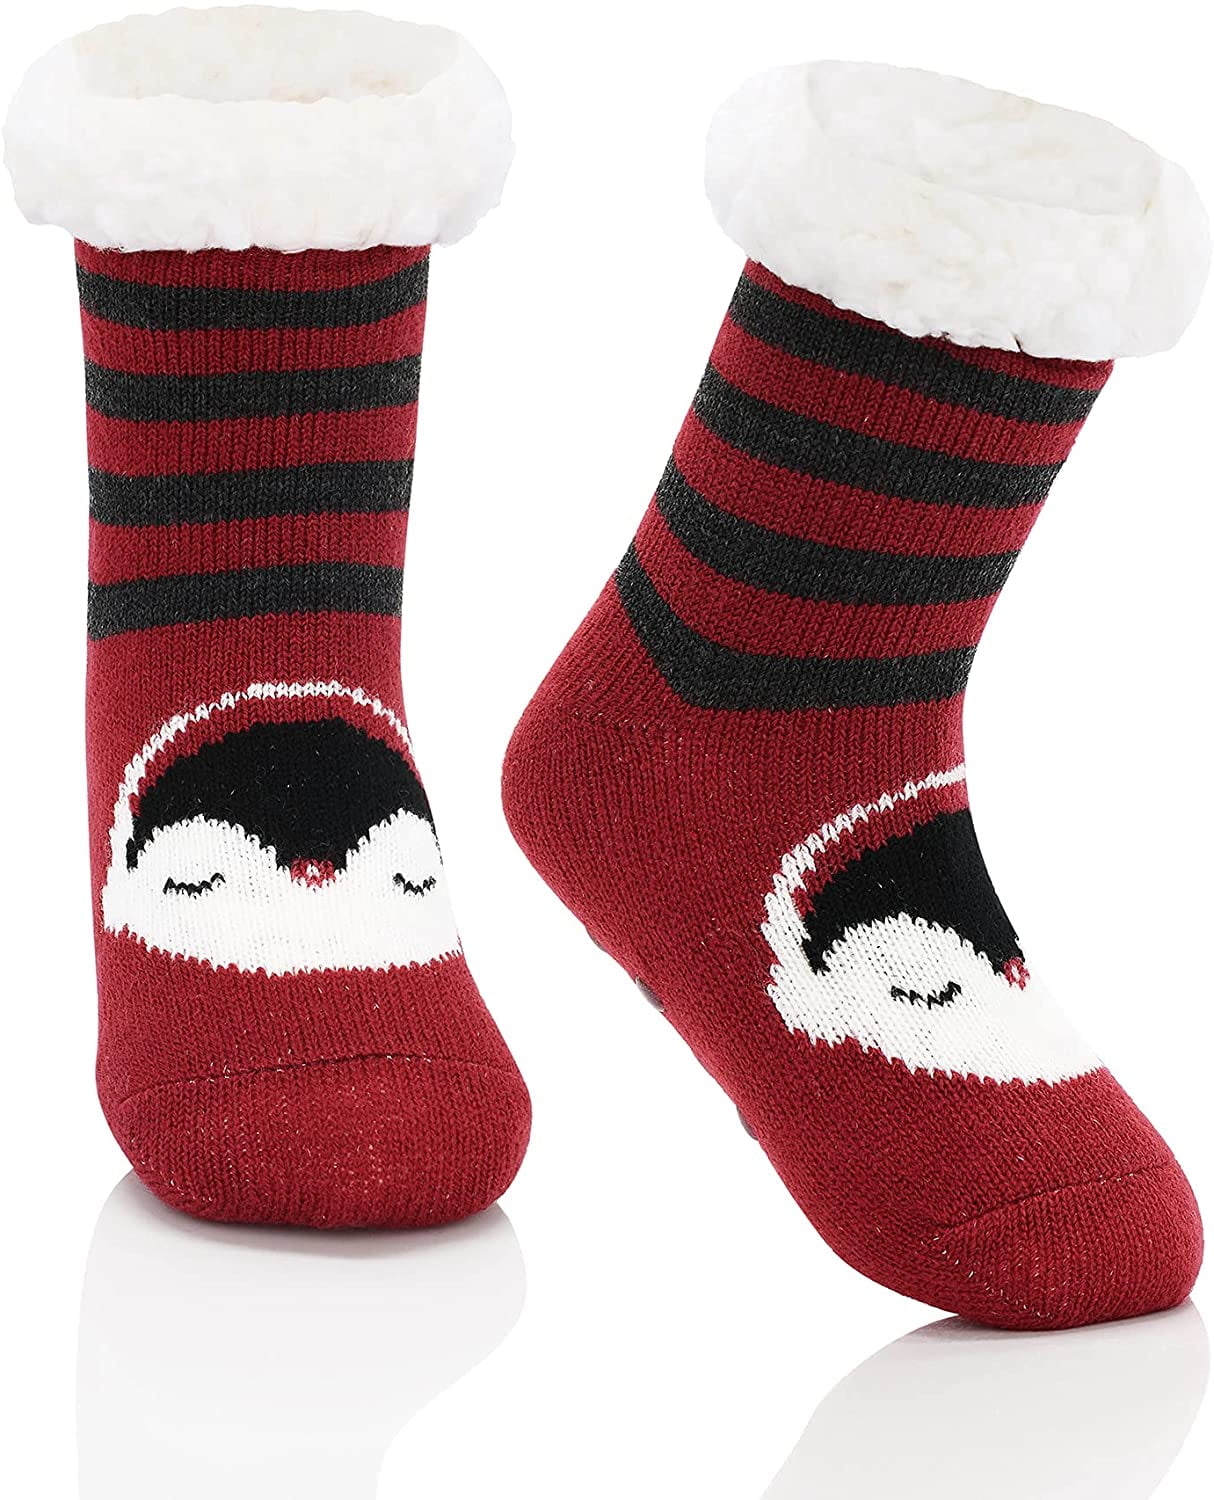 Details about   Smiley Face Kids Slipper Socks  Fuzzy Top Gripper Bottoms  Black  Sock Size 6 